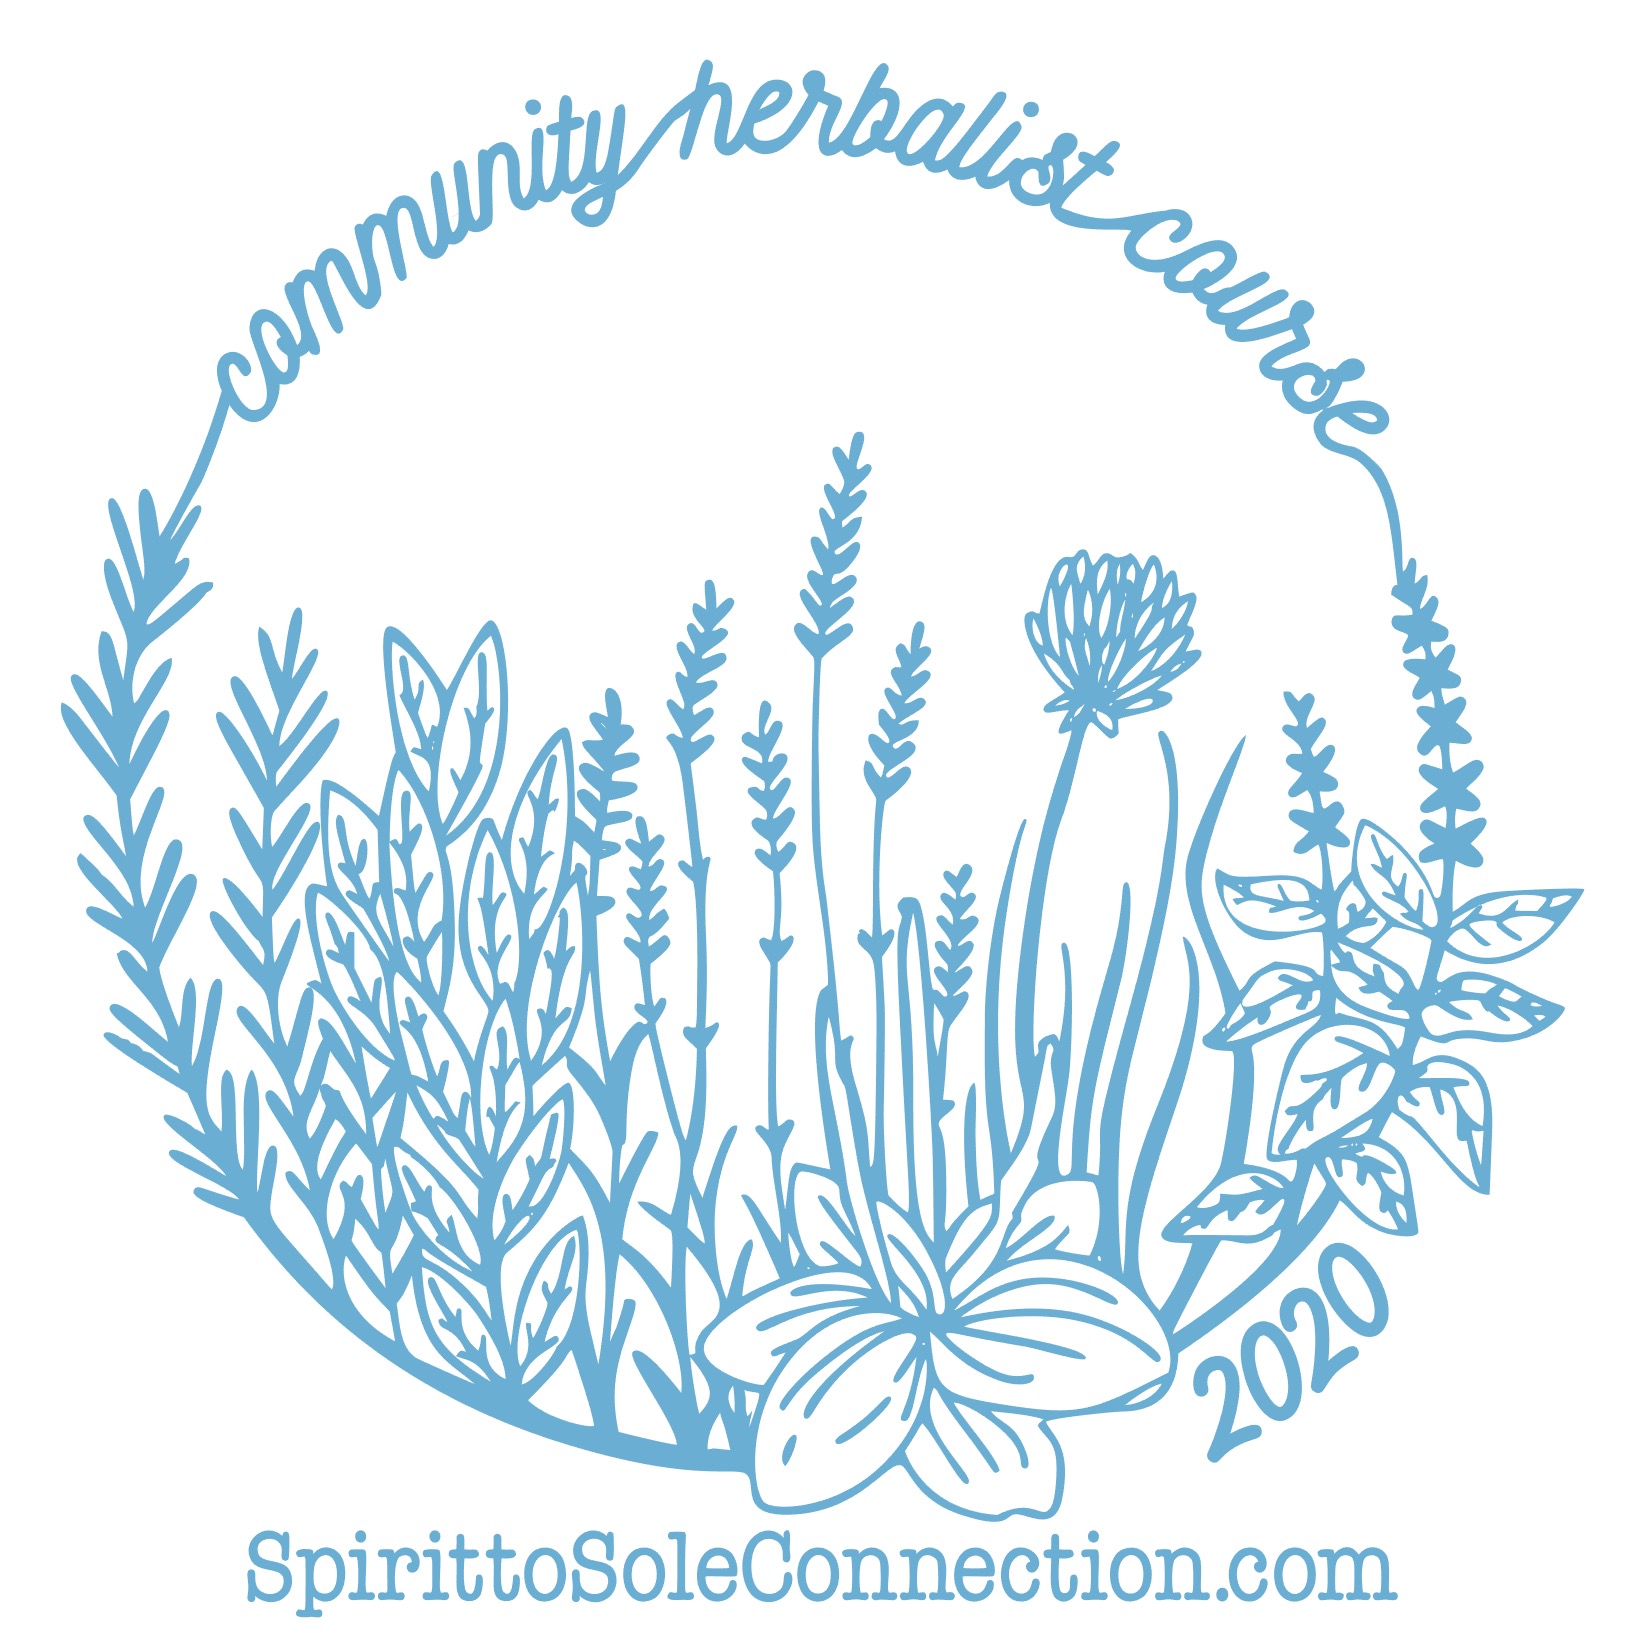 Community Herbalist Course 2020